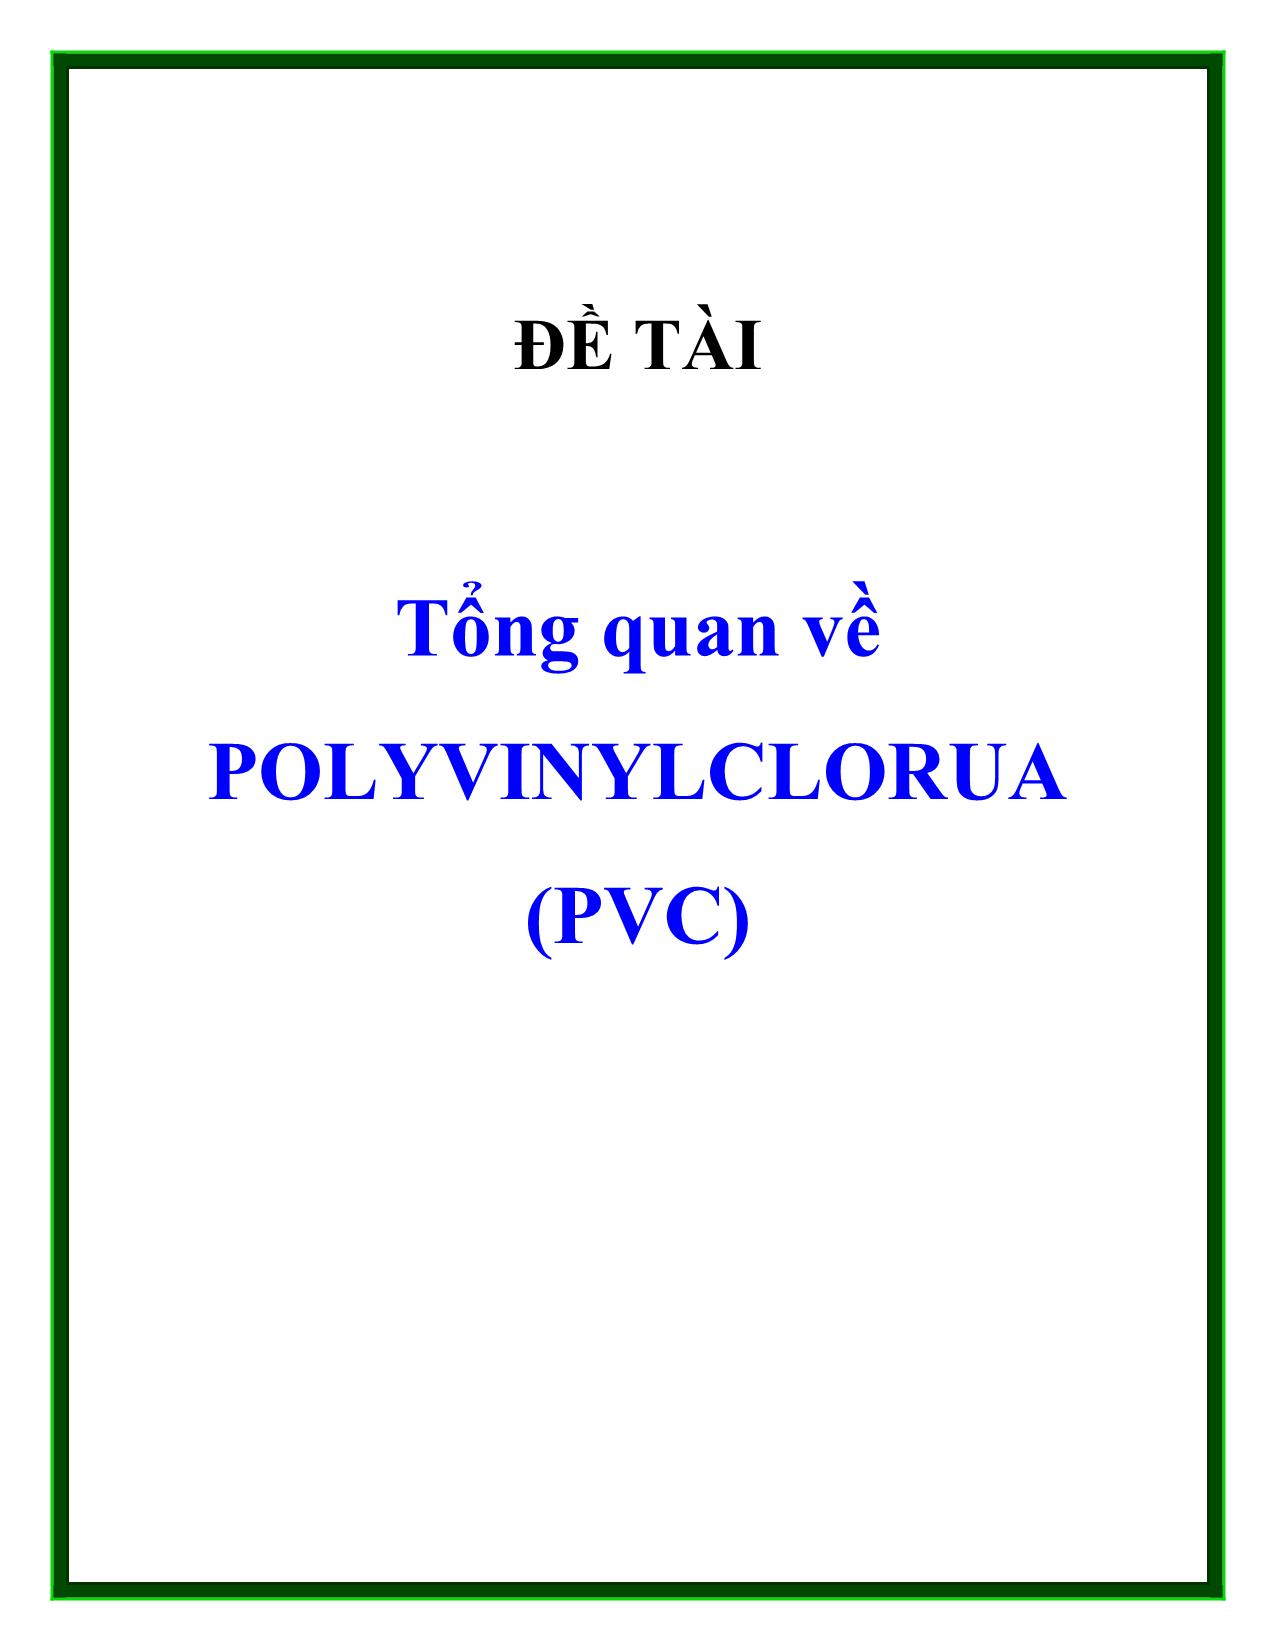 Đề tài Tổng quan về polyvinylclorua (pvc) trang 1